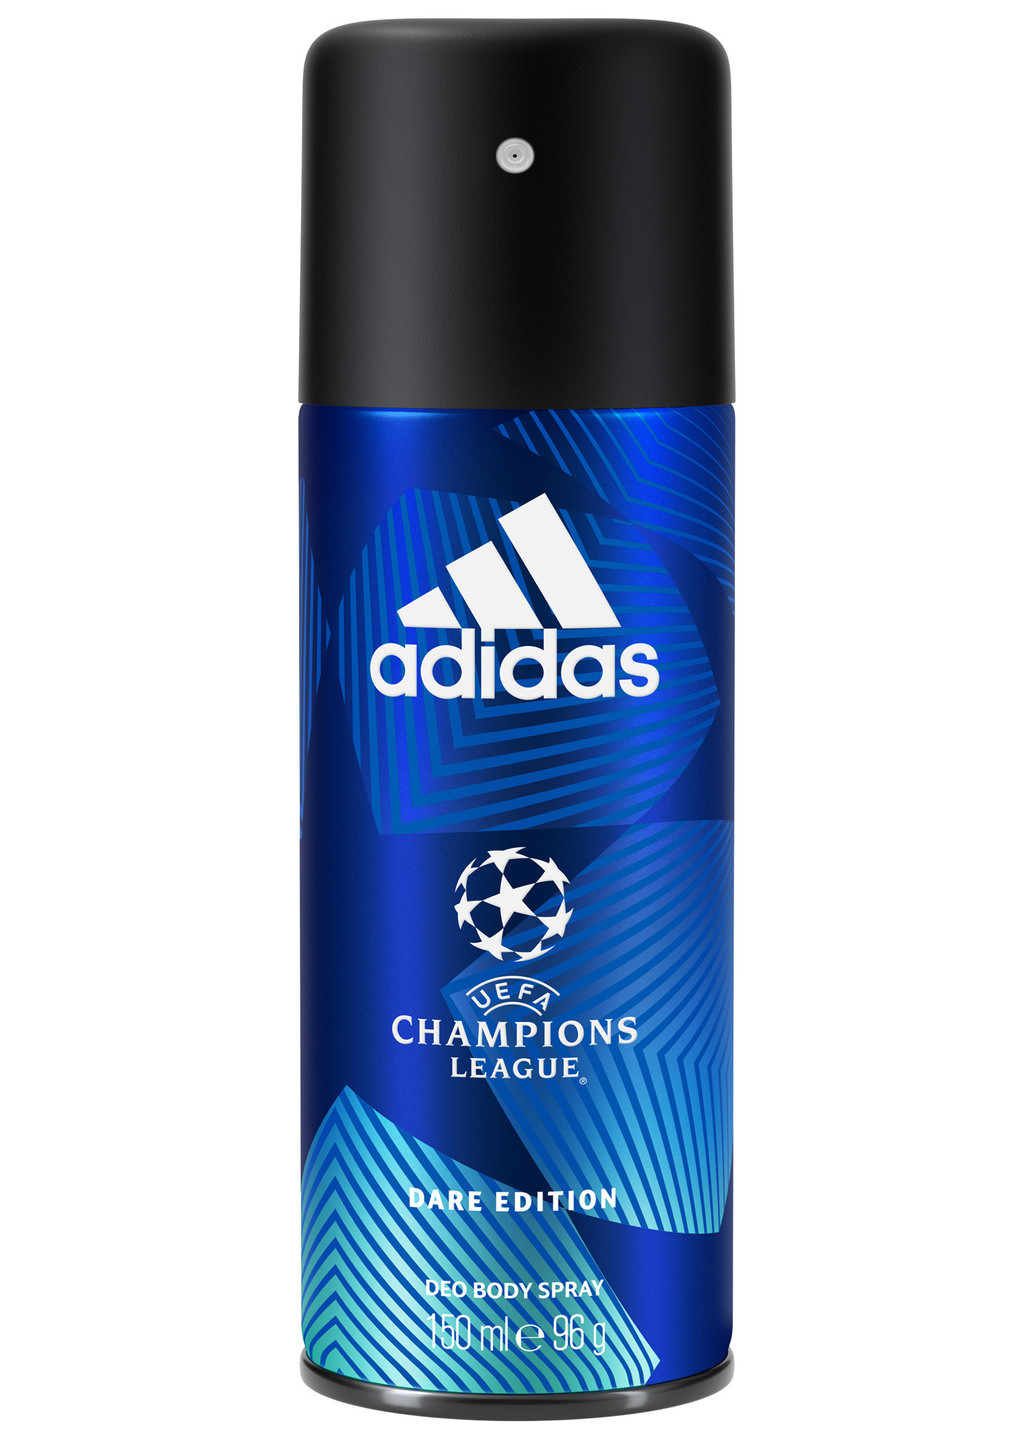 Дезодорант-антиперспірант UEFA Champions League Dare Edition Deo Body Spray 150 мл adidas (192643258)